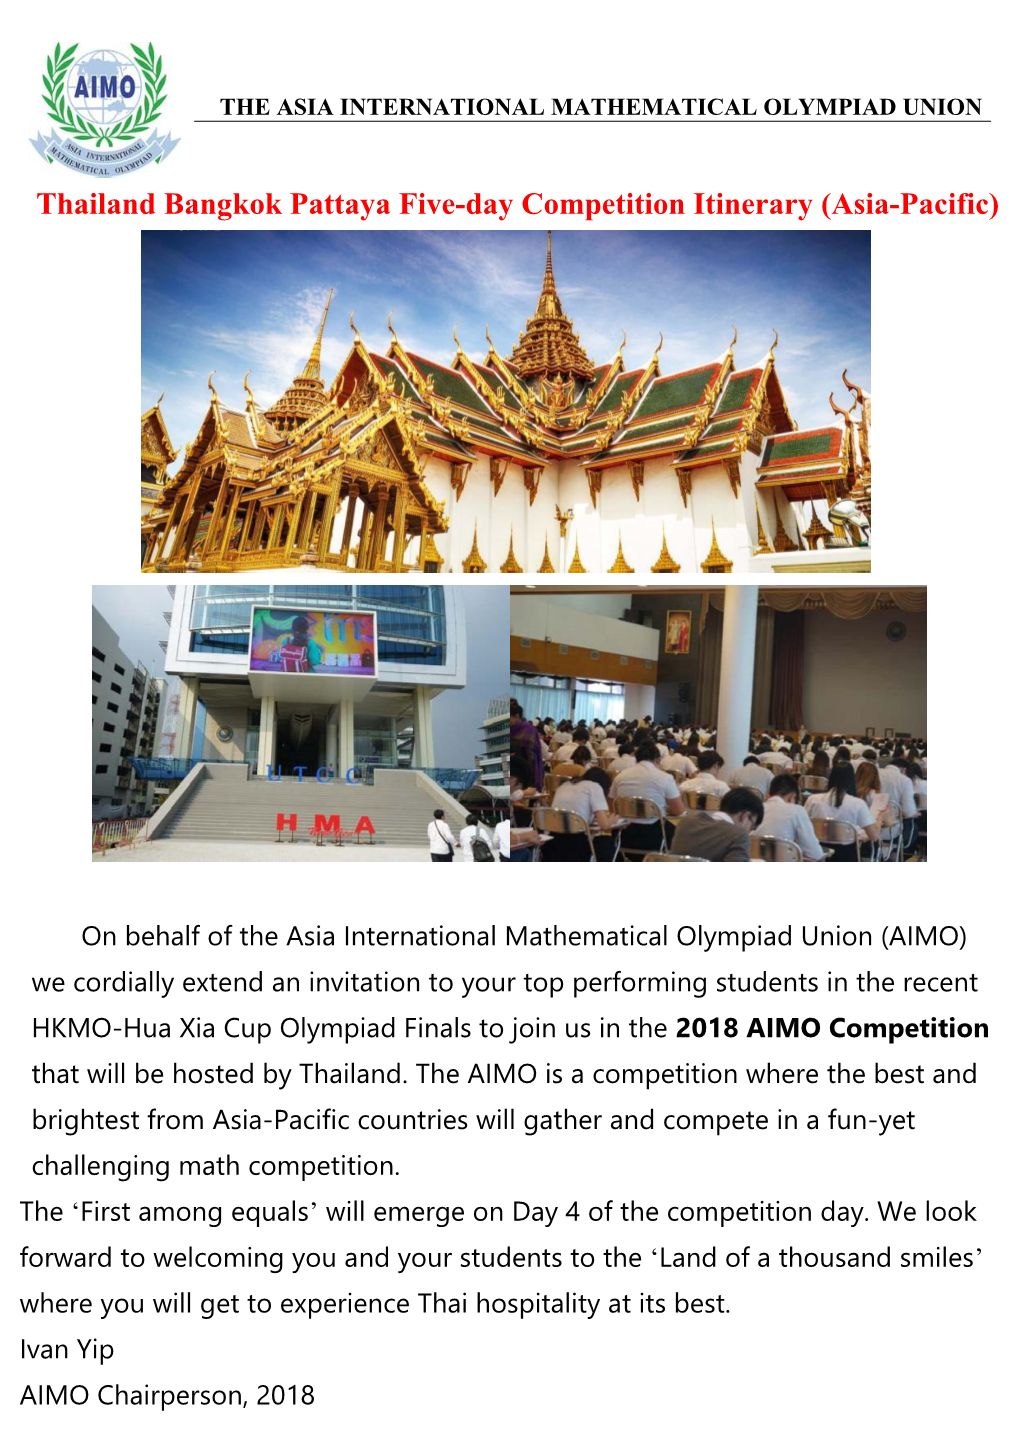 Thailand Bangkok Pattaya Five-Day Competition Itinerary (Asia-Pacific)